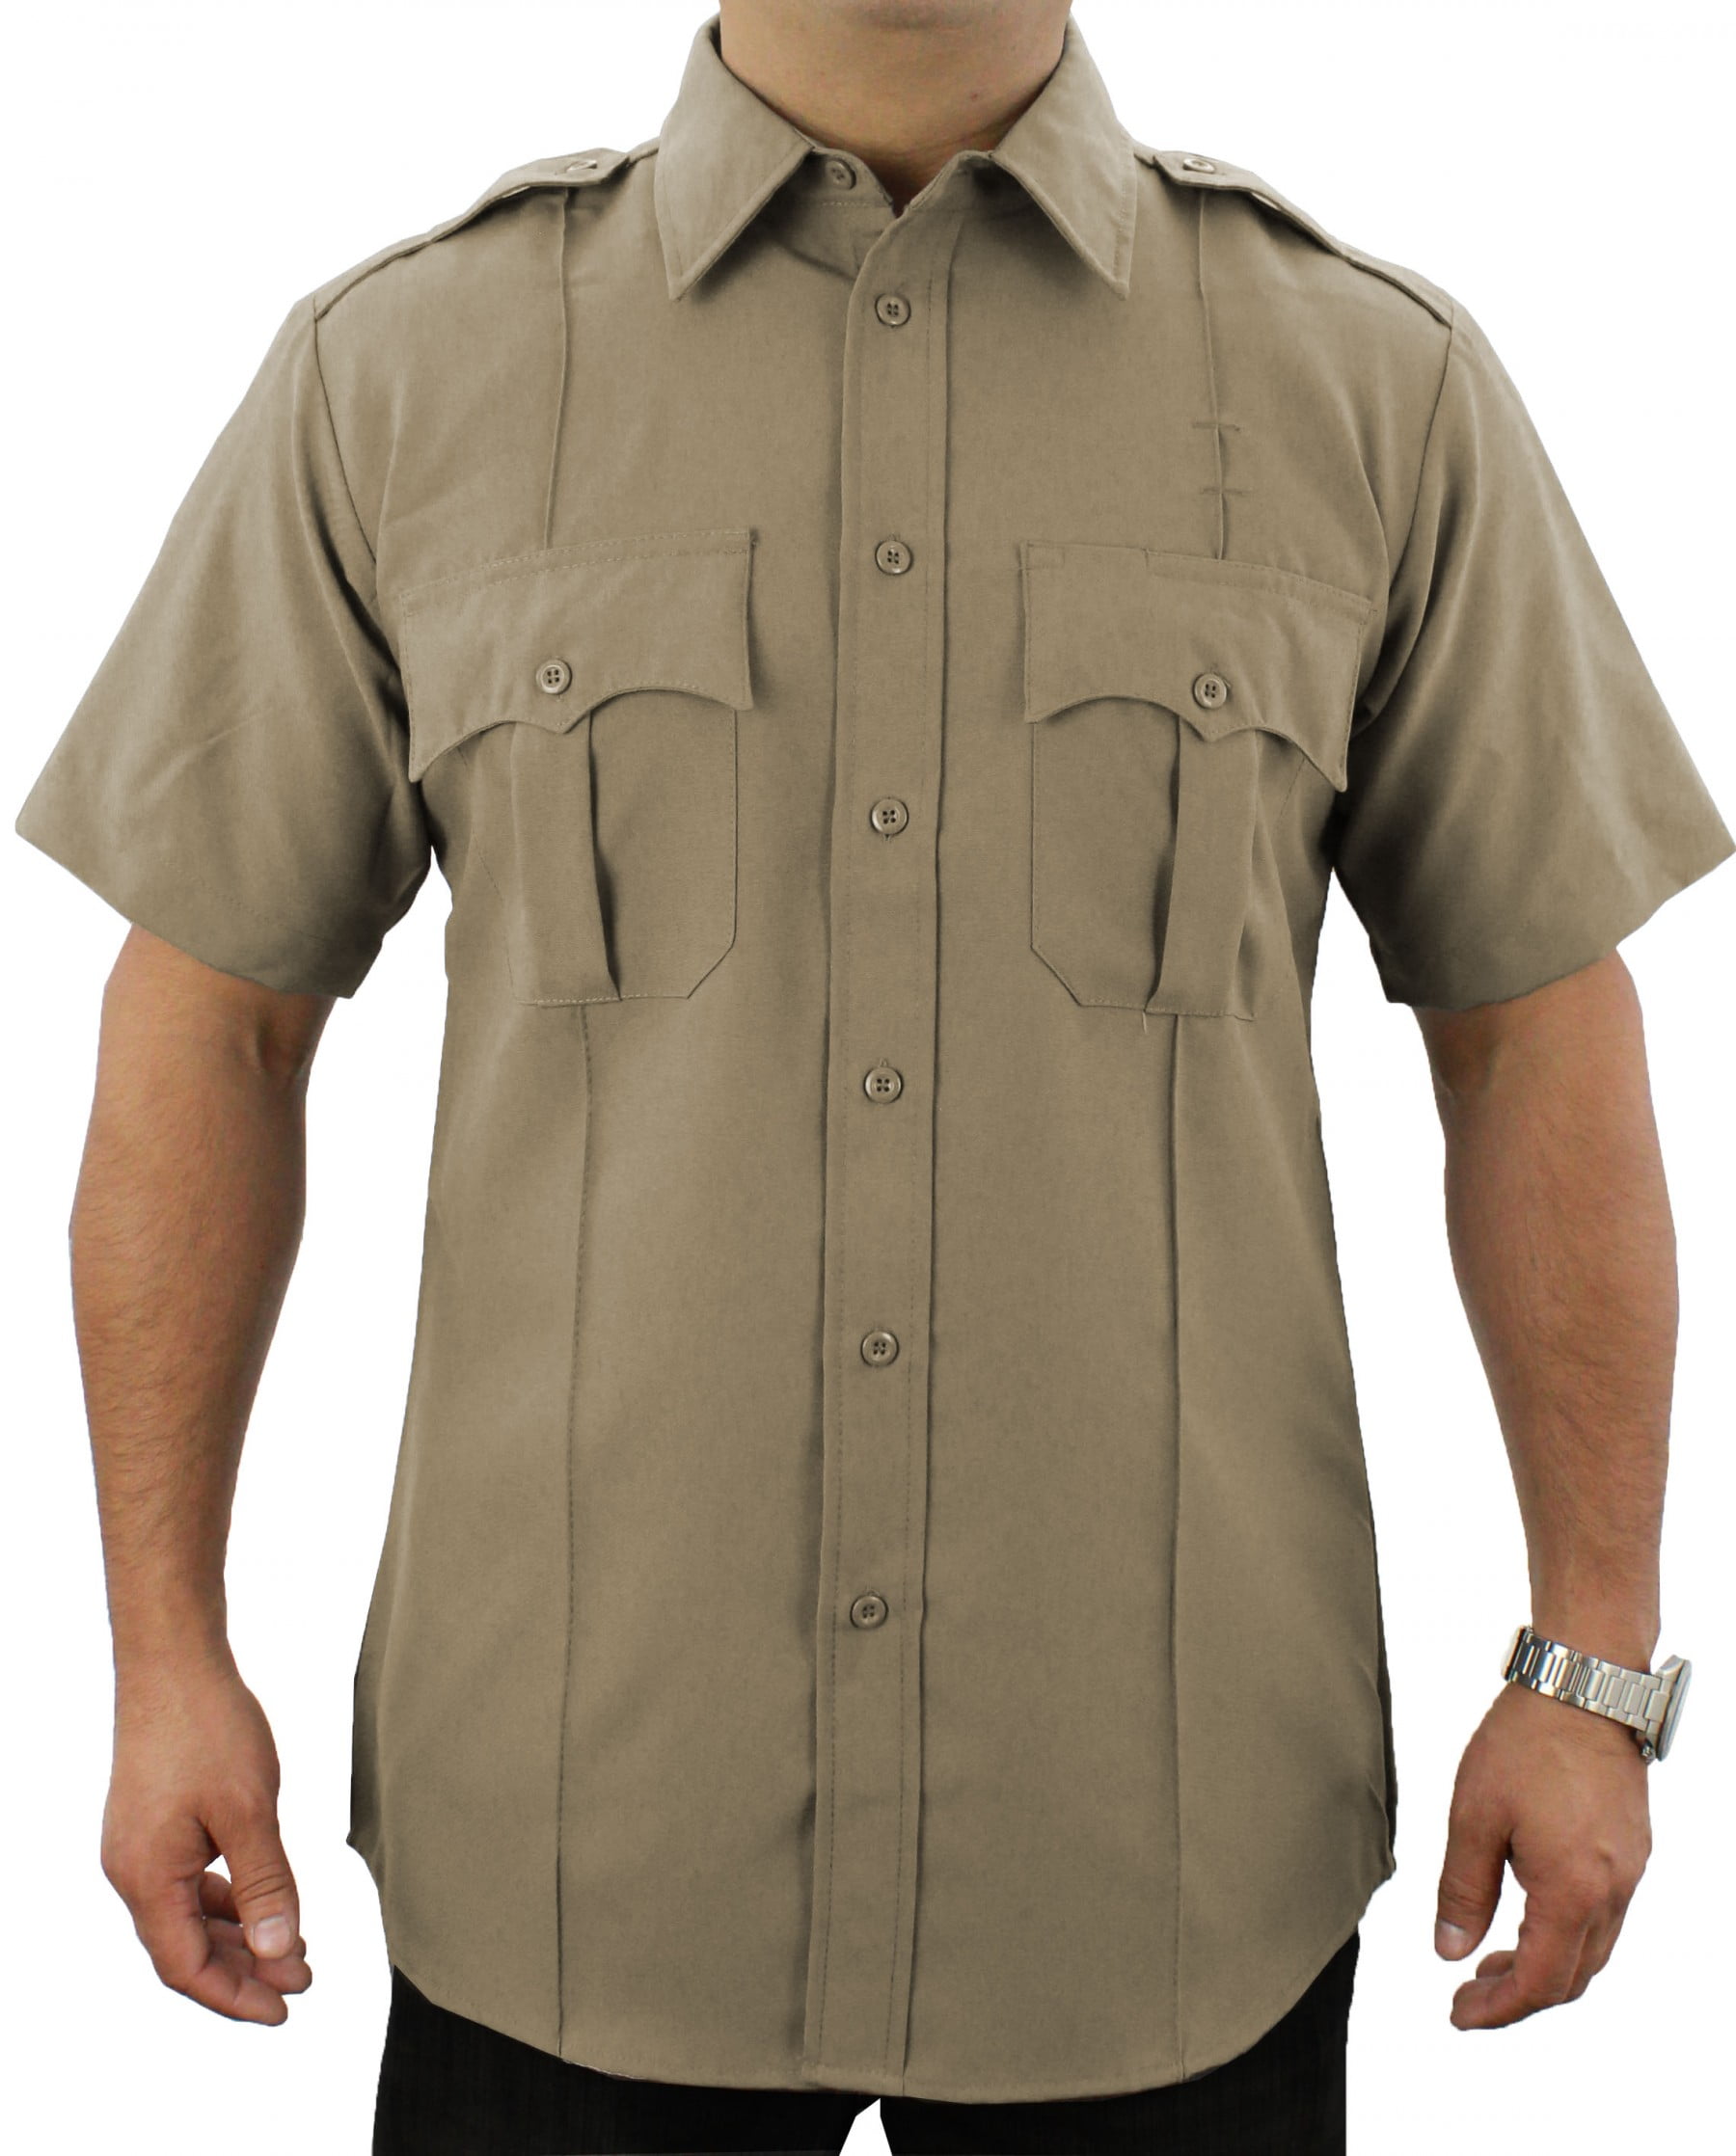 Large, Black First Class 100% Polyester Short-Sleeve Mens Uniform Shirt Black